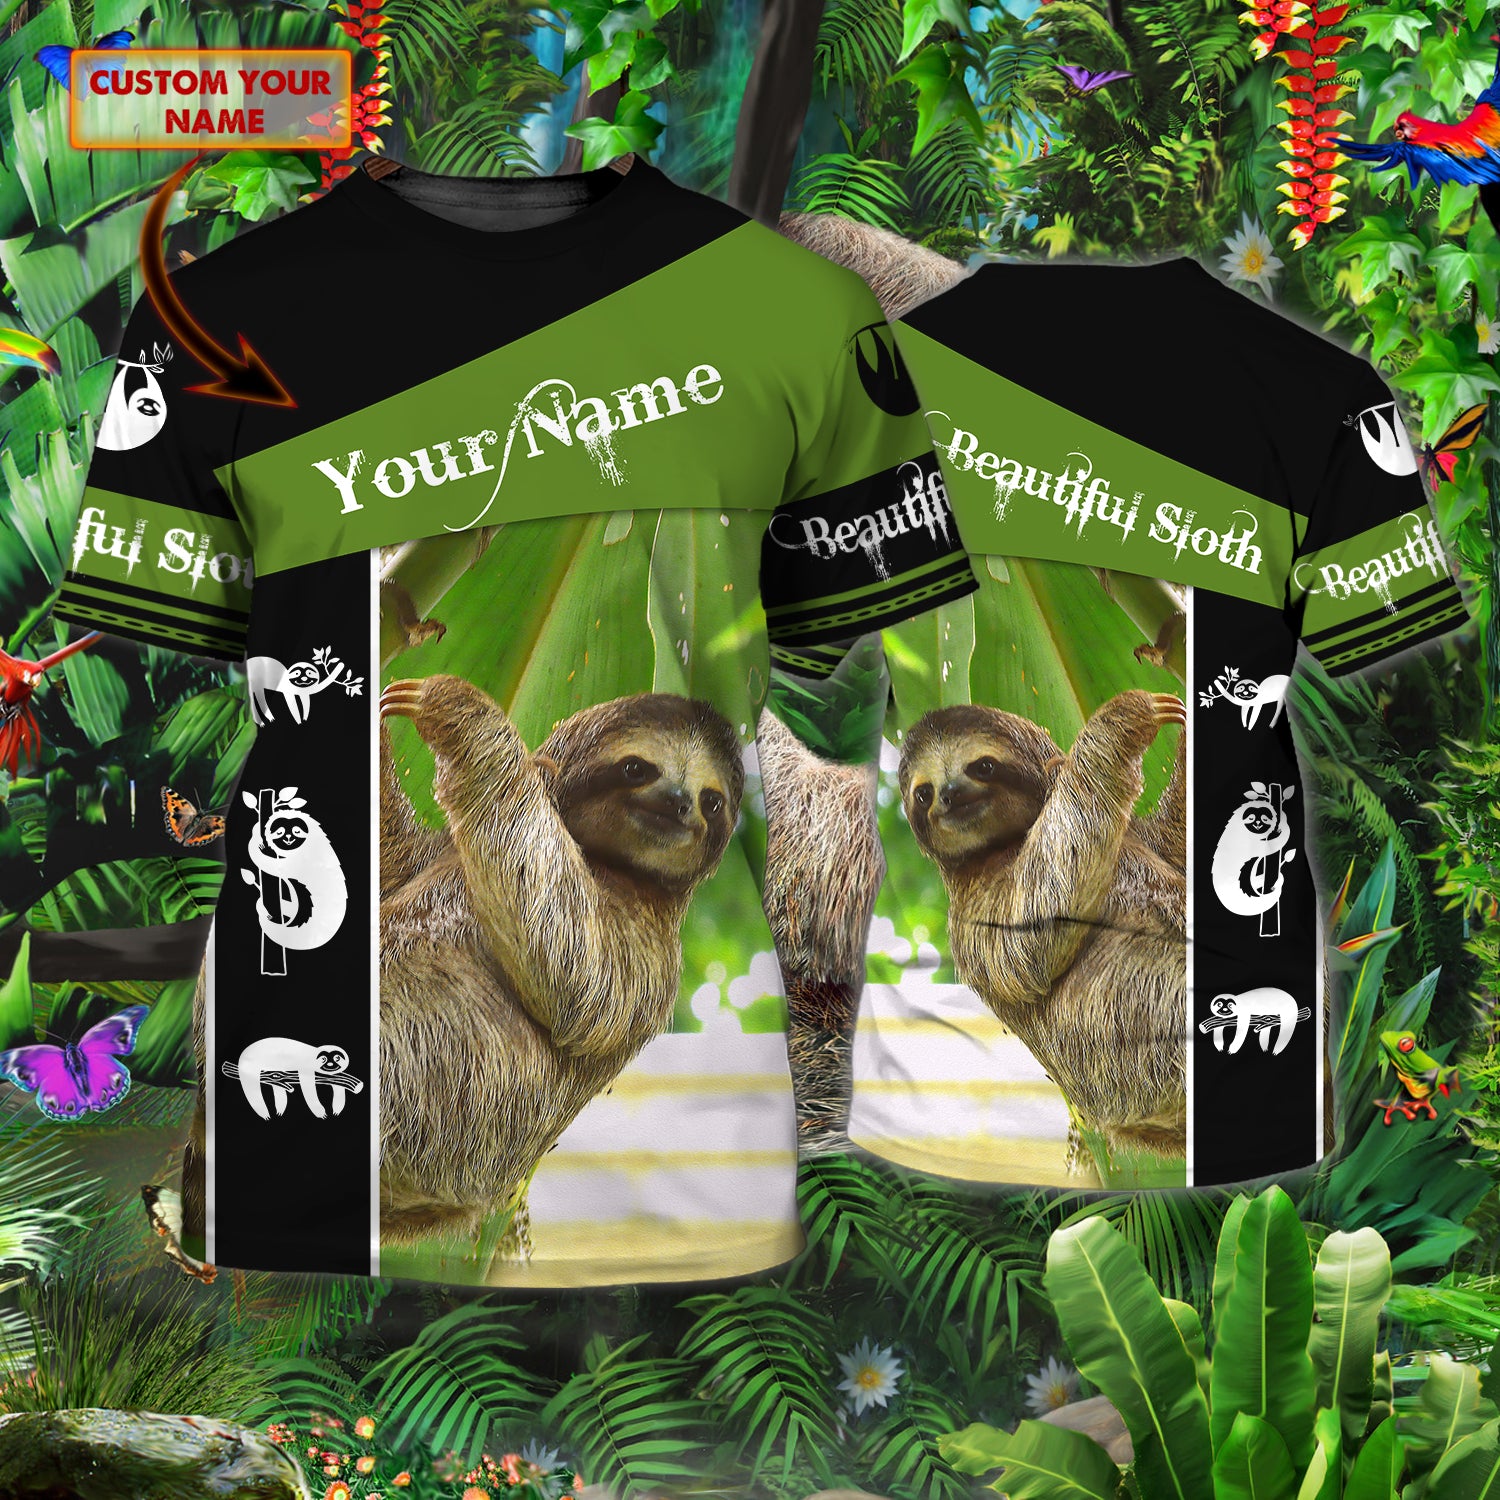 Beautiful Sloth - Personalized Tshirt - Urt96